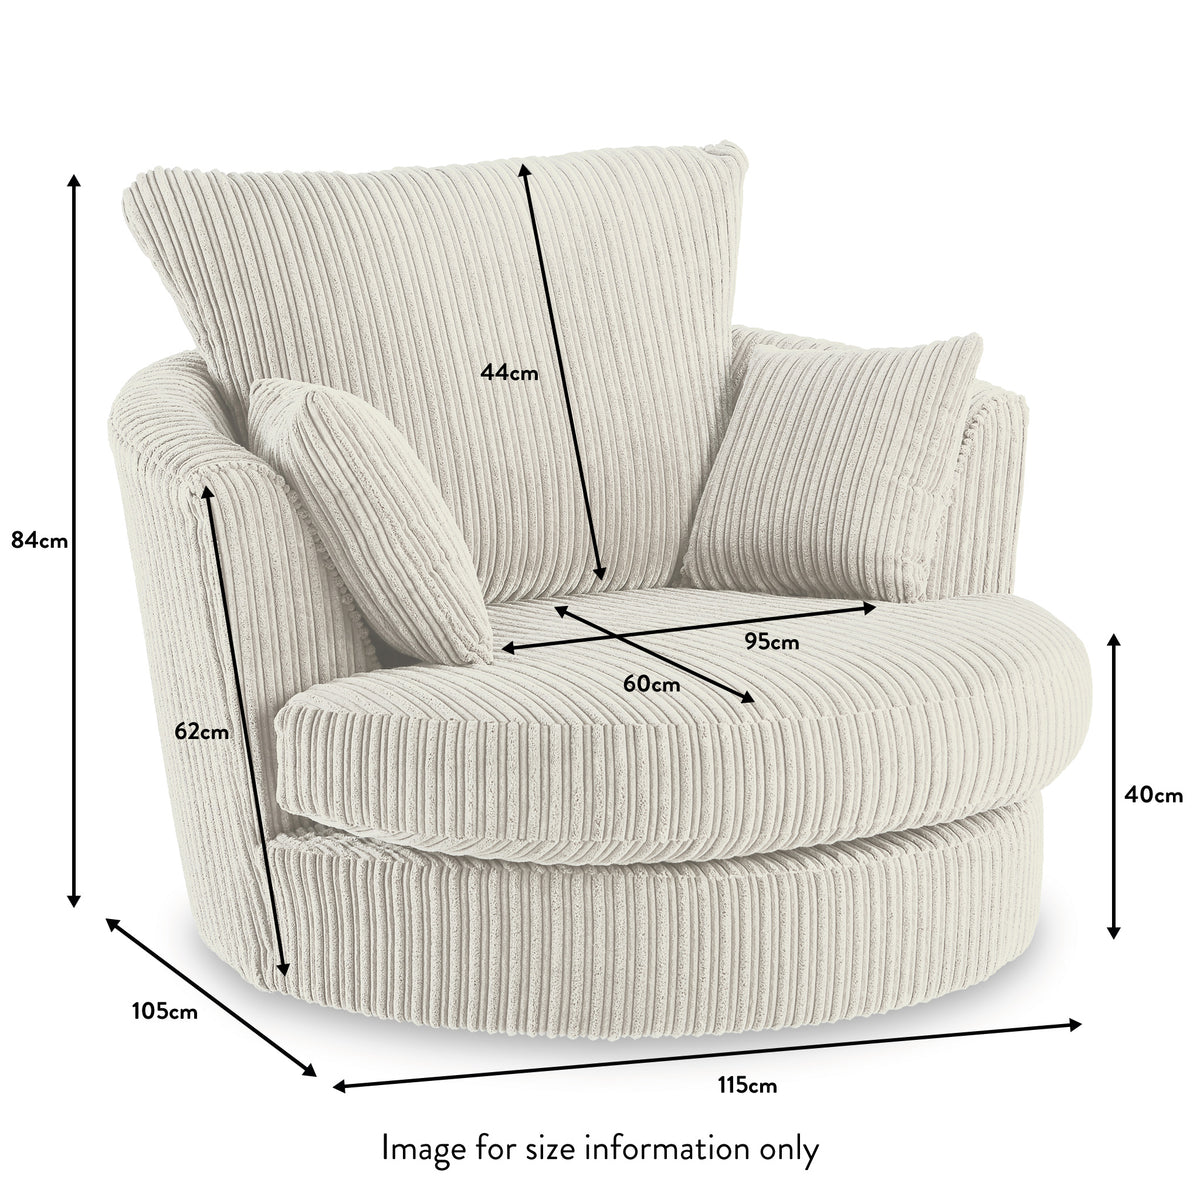 Bletchley Cream Jumbo Cord Swivel Chair dimensions